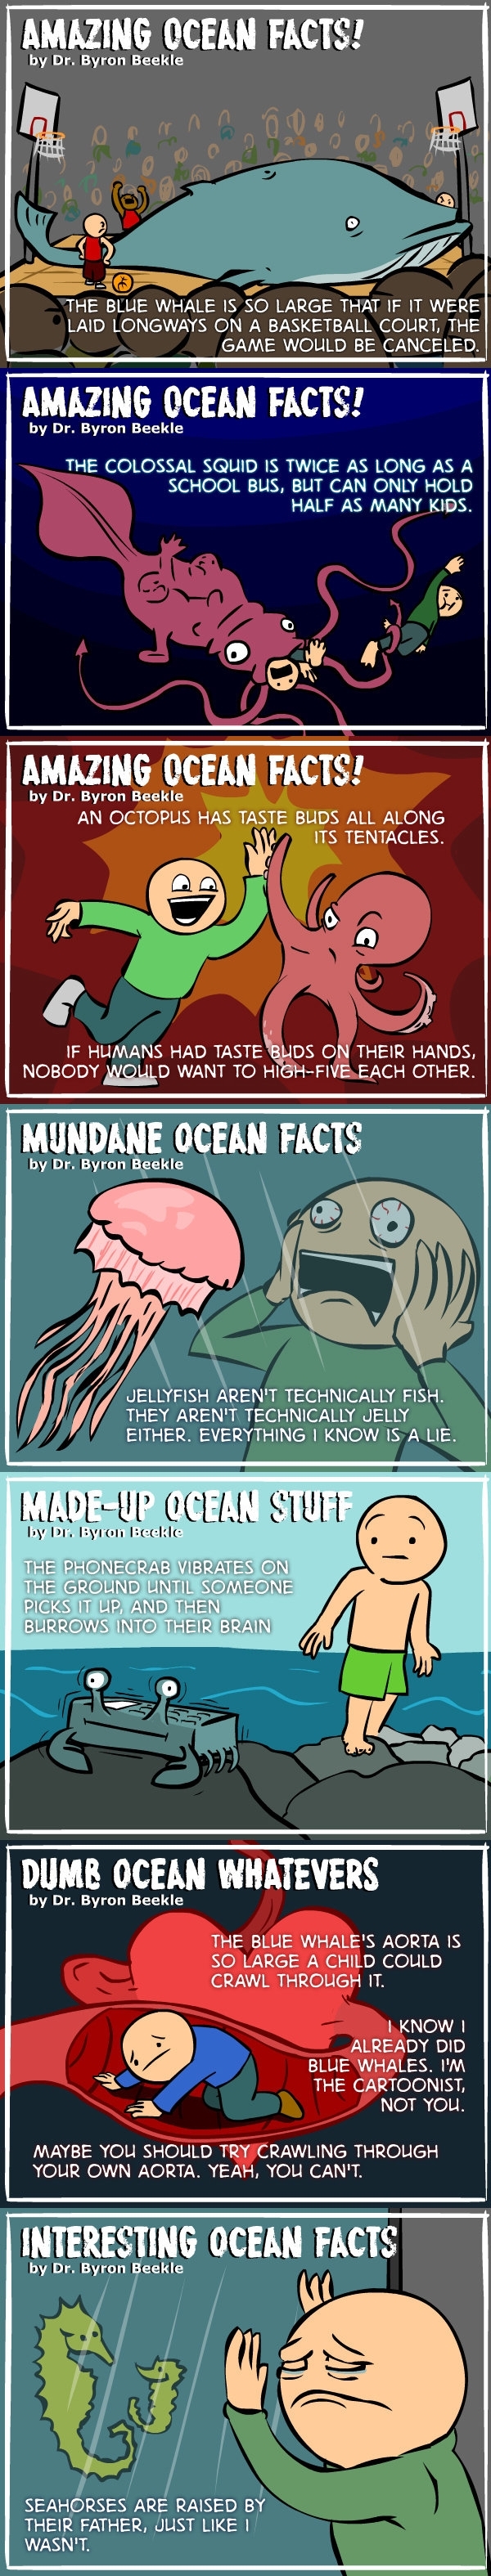 Real Ocean Facts Broaden your minds motherfuckers